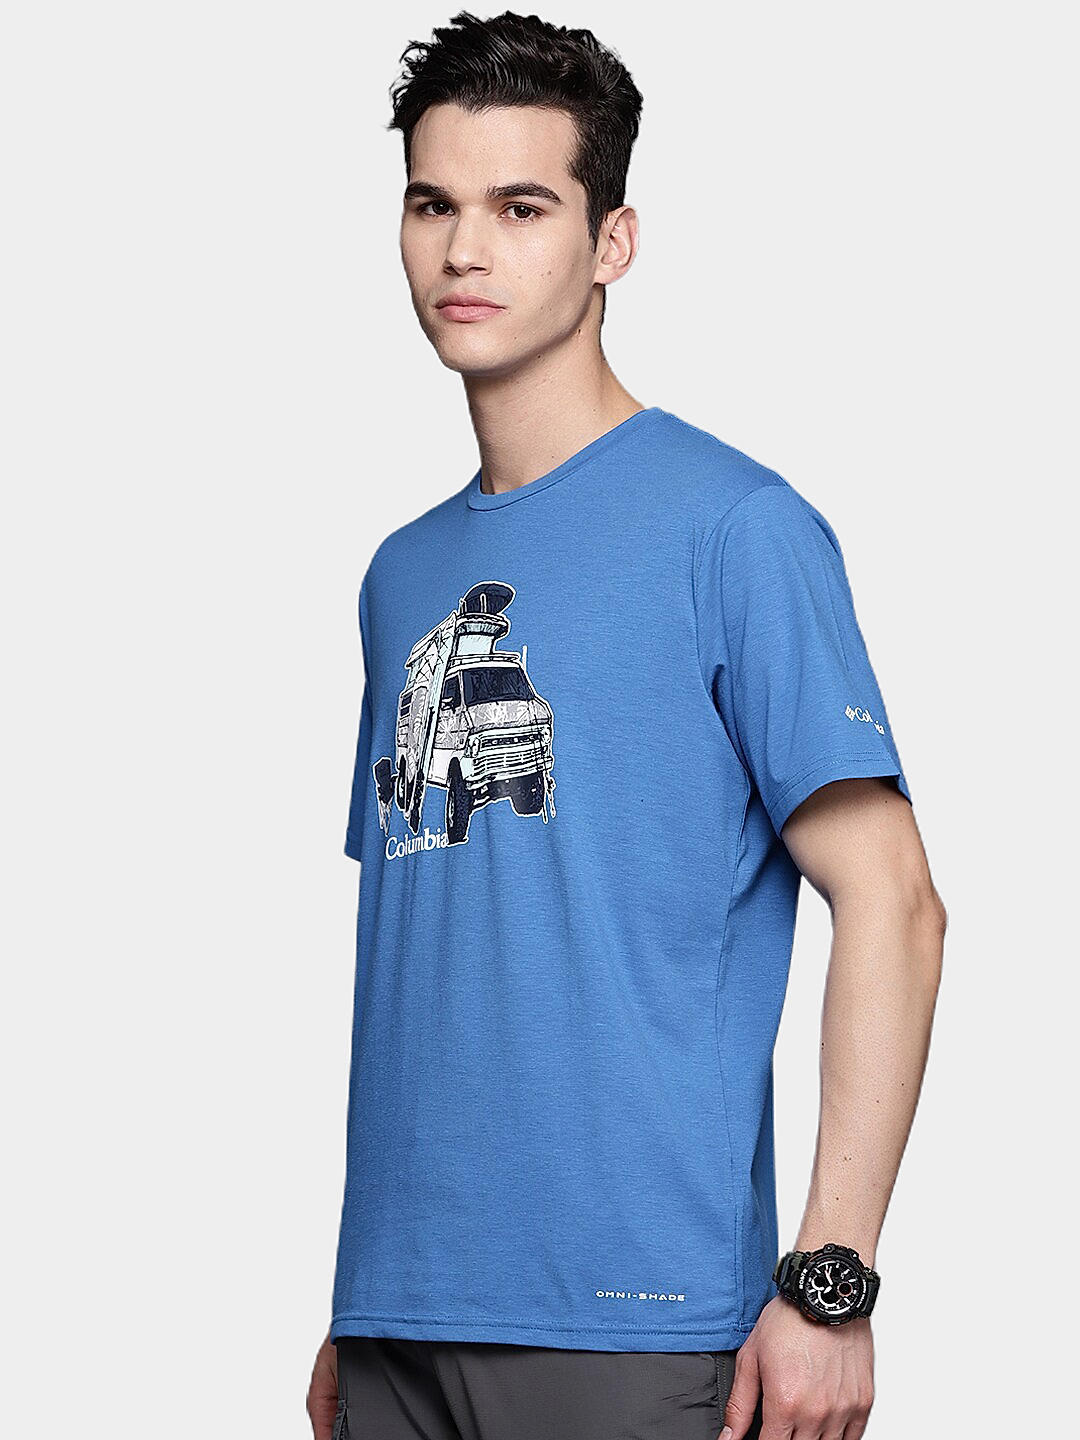 Columbia Sportswear Printed Men Round Neck Blue T-shirt